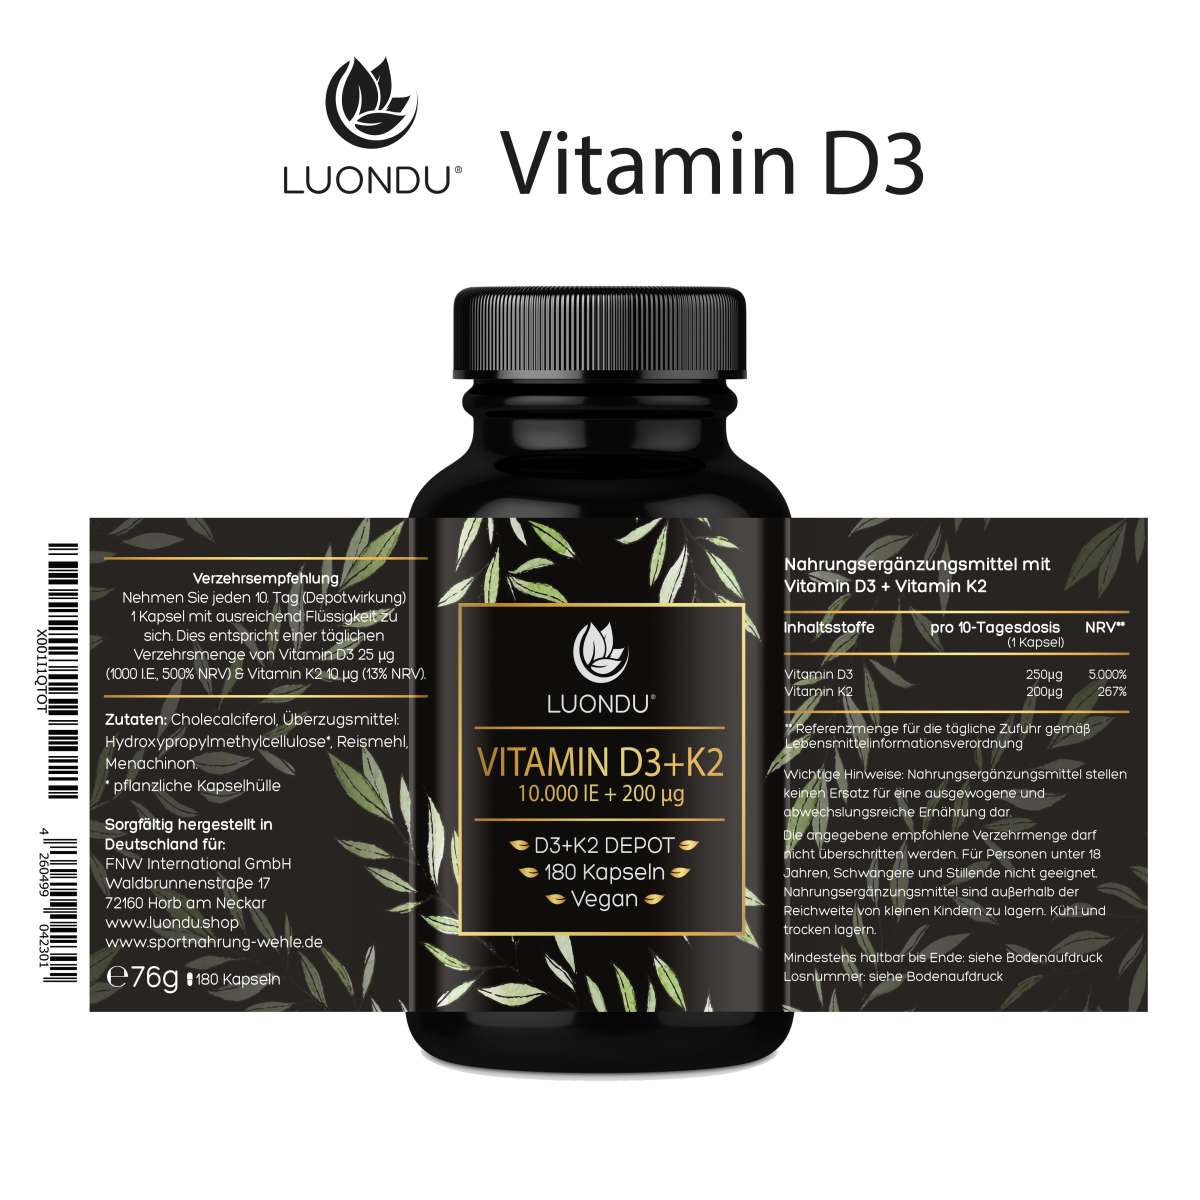 Luondu Vitamin D3 10.000 I.E + K2 MK7 200 mcg Depot Hochdosiert - 180 Vegane Kapseln